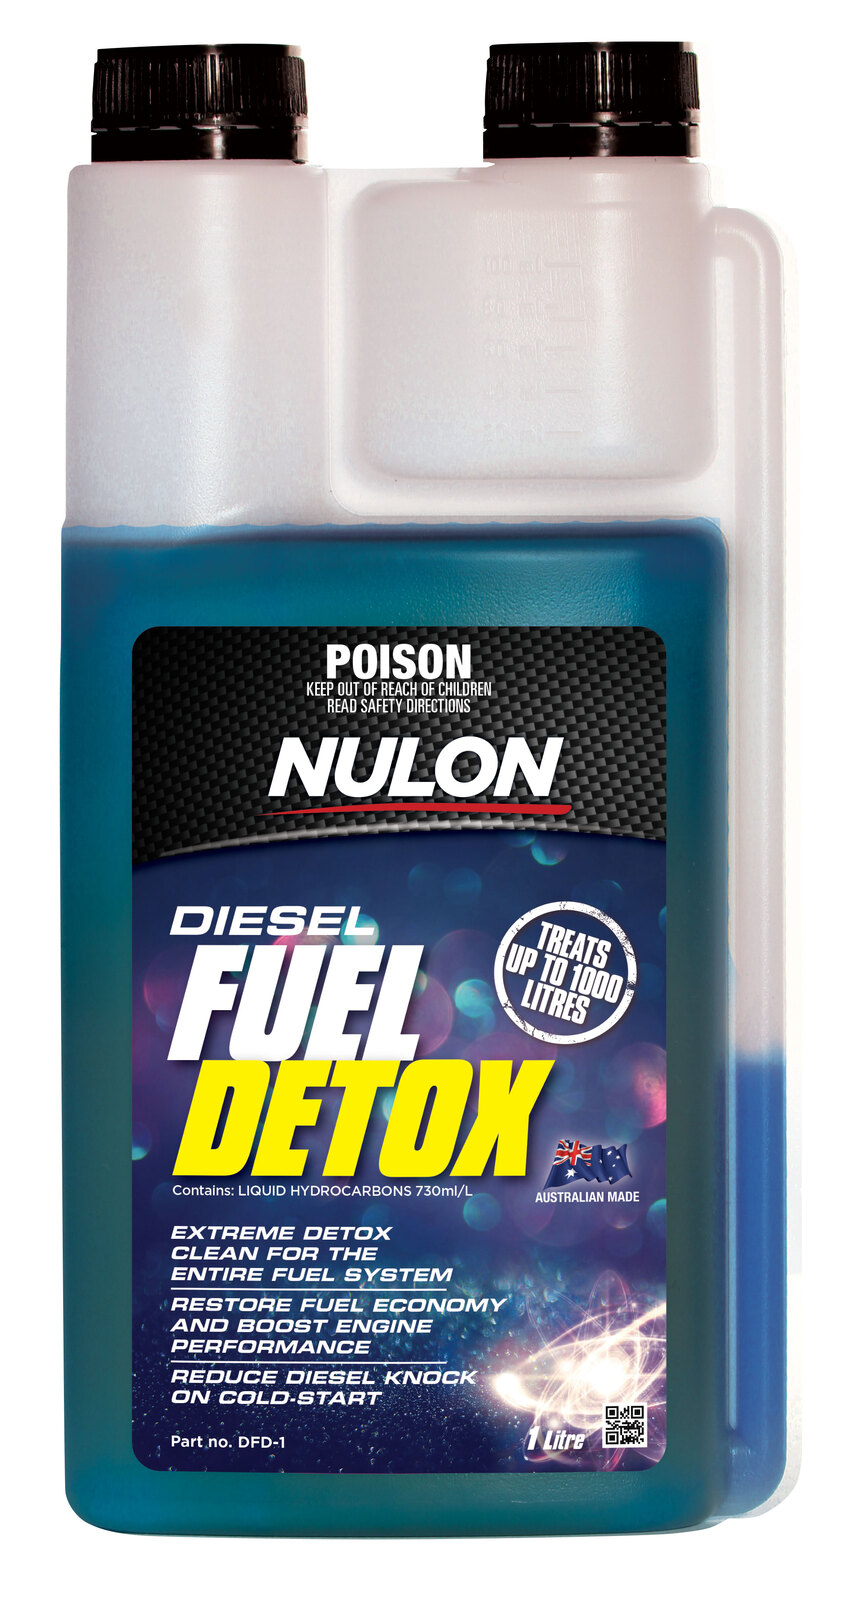 NULON Diesel Fuel Detox, Each